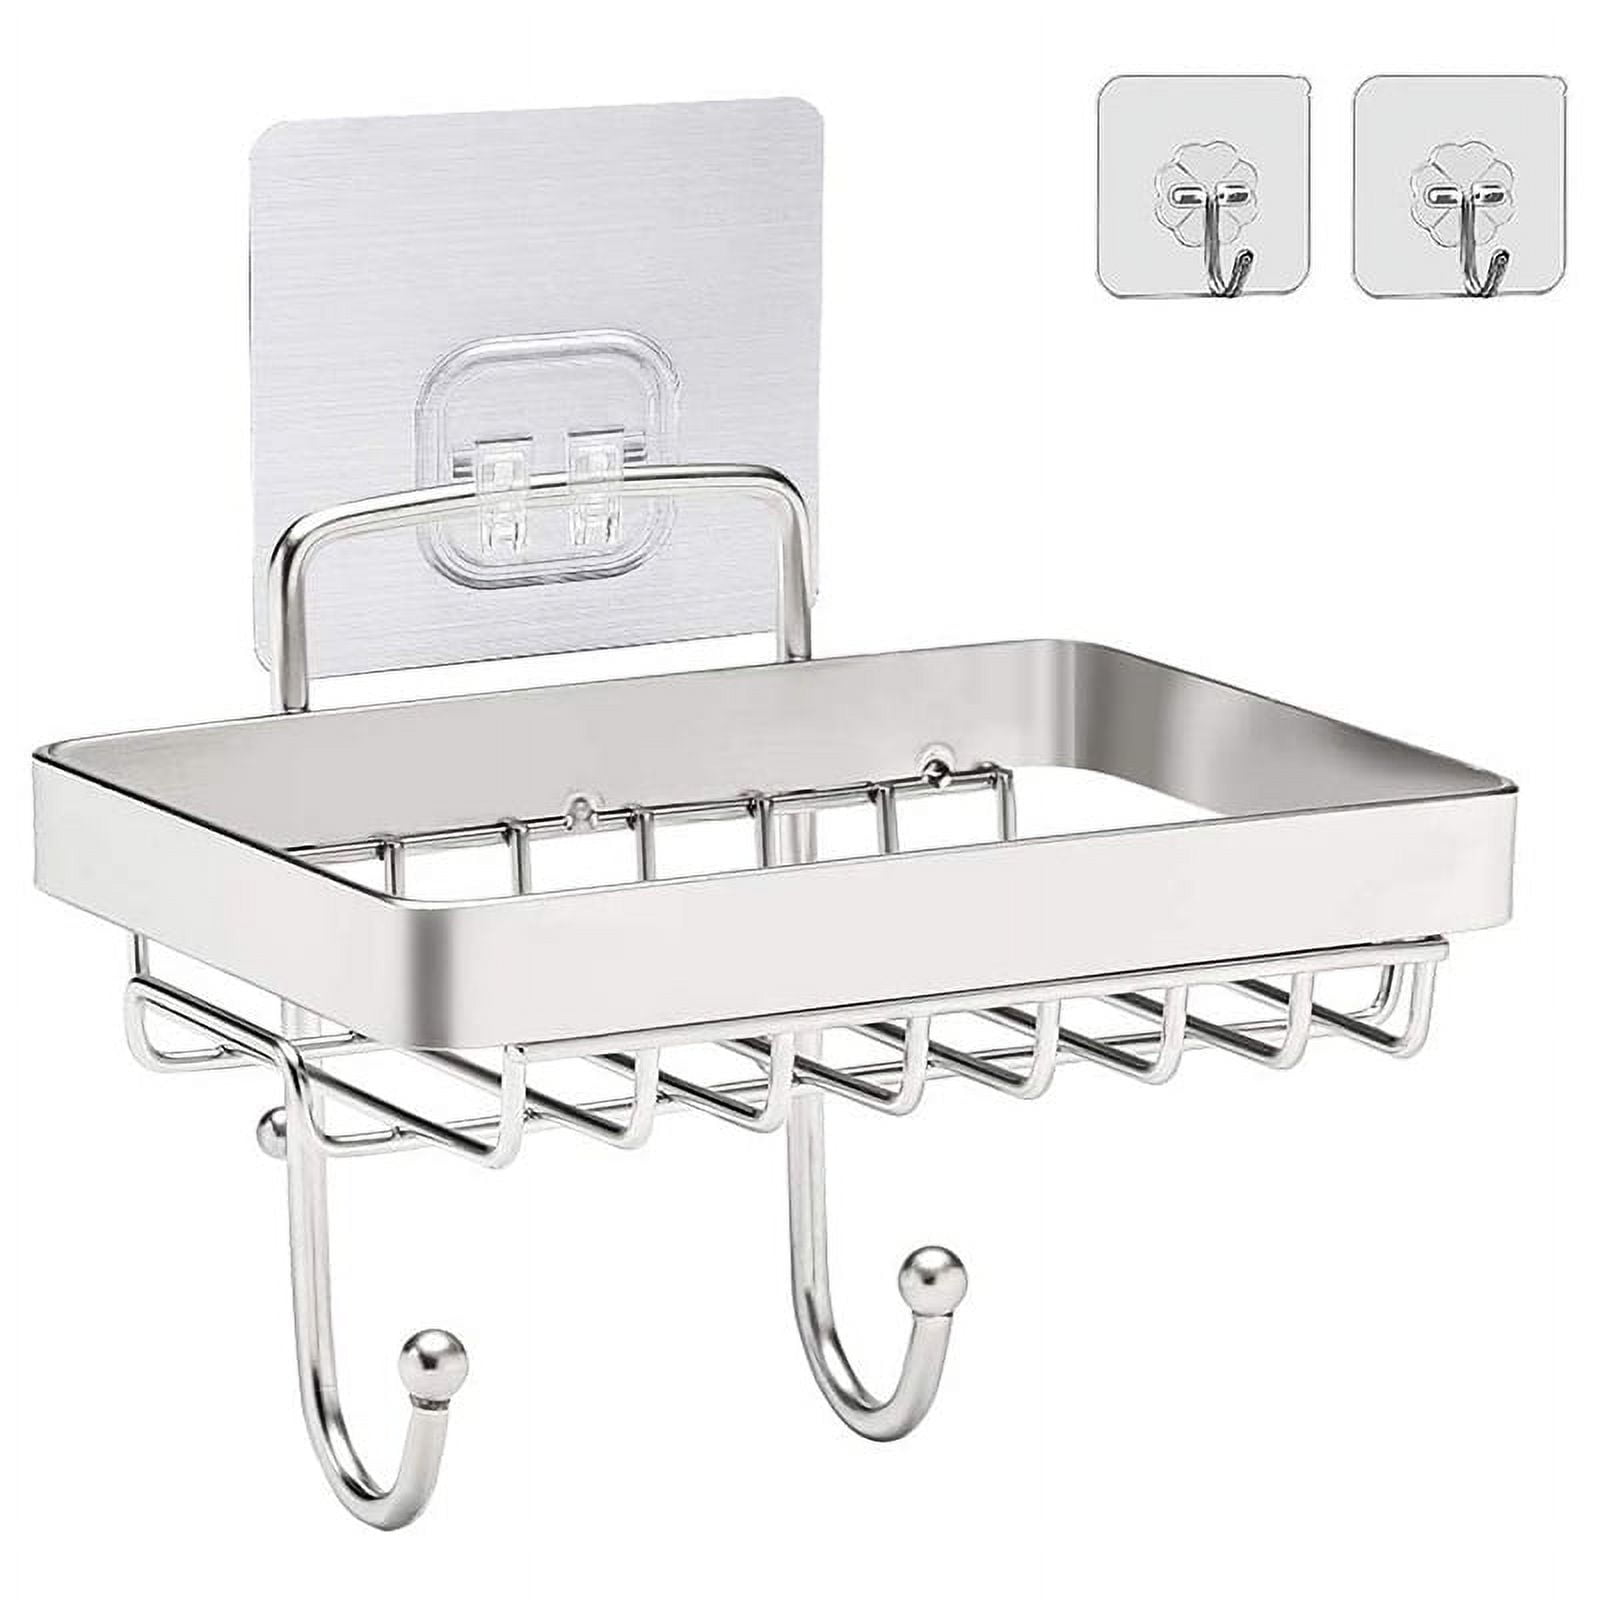 Dancrul Bathroom Soap Dishes, Bar Soap Holder for Shower Wall, Rust Proof  Metal Self Draining Soap Tray, Wall Mounted Soap Dish for Shower, Shower